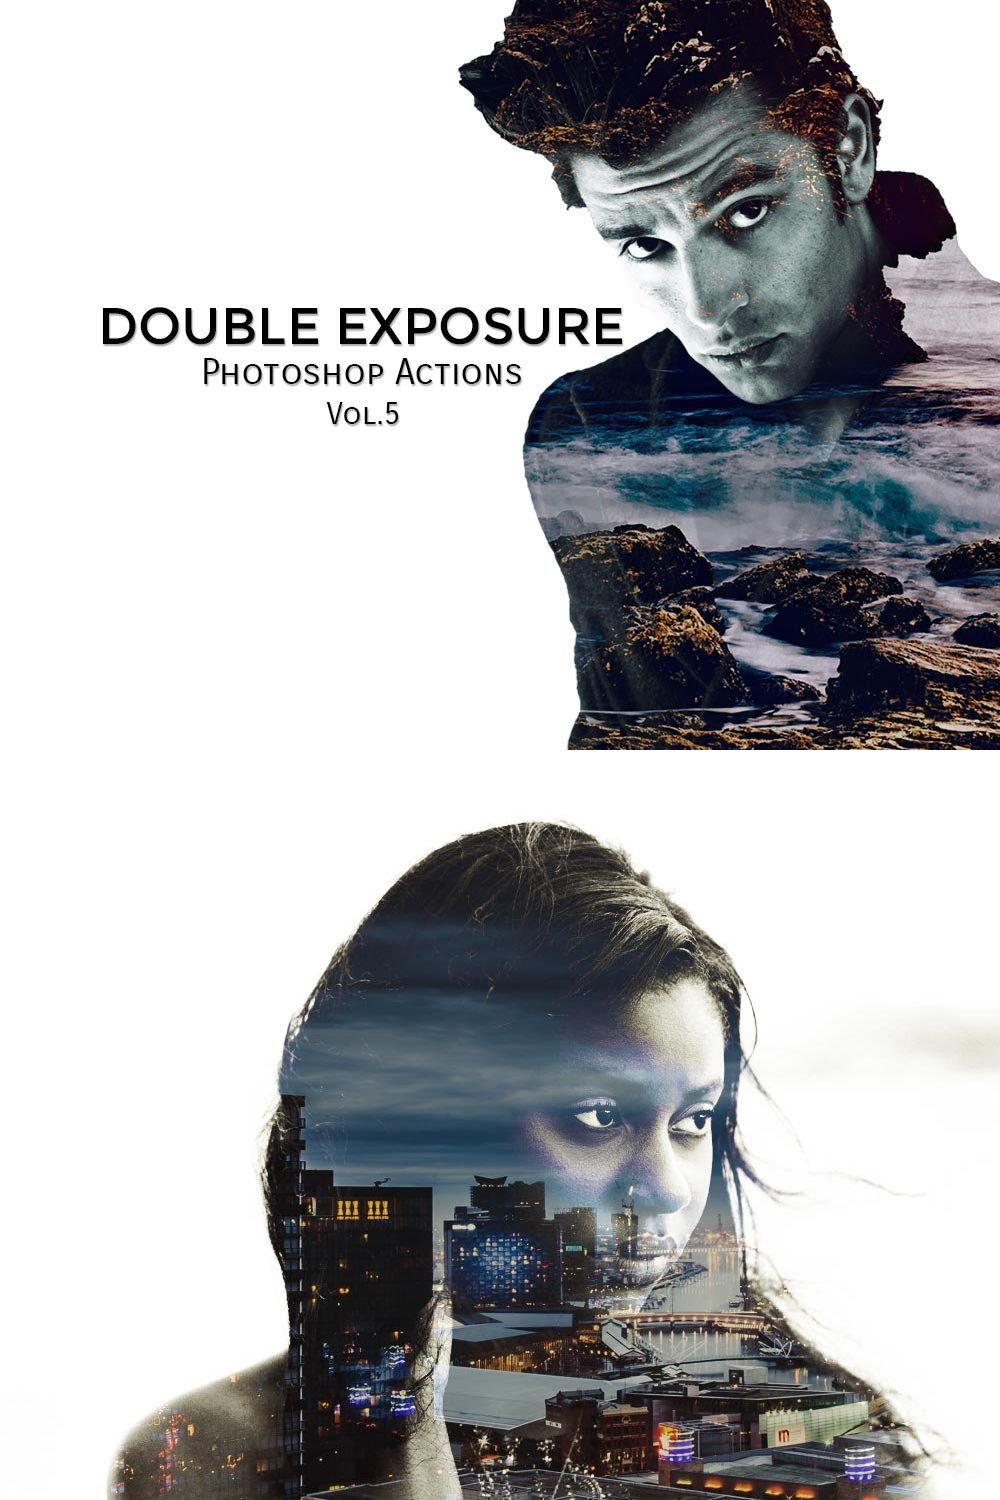 Double Exposure PS Actions Vol.5 pinterest preview image.